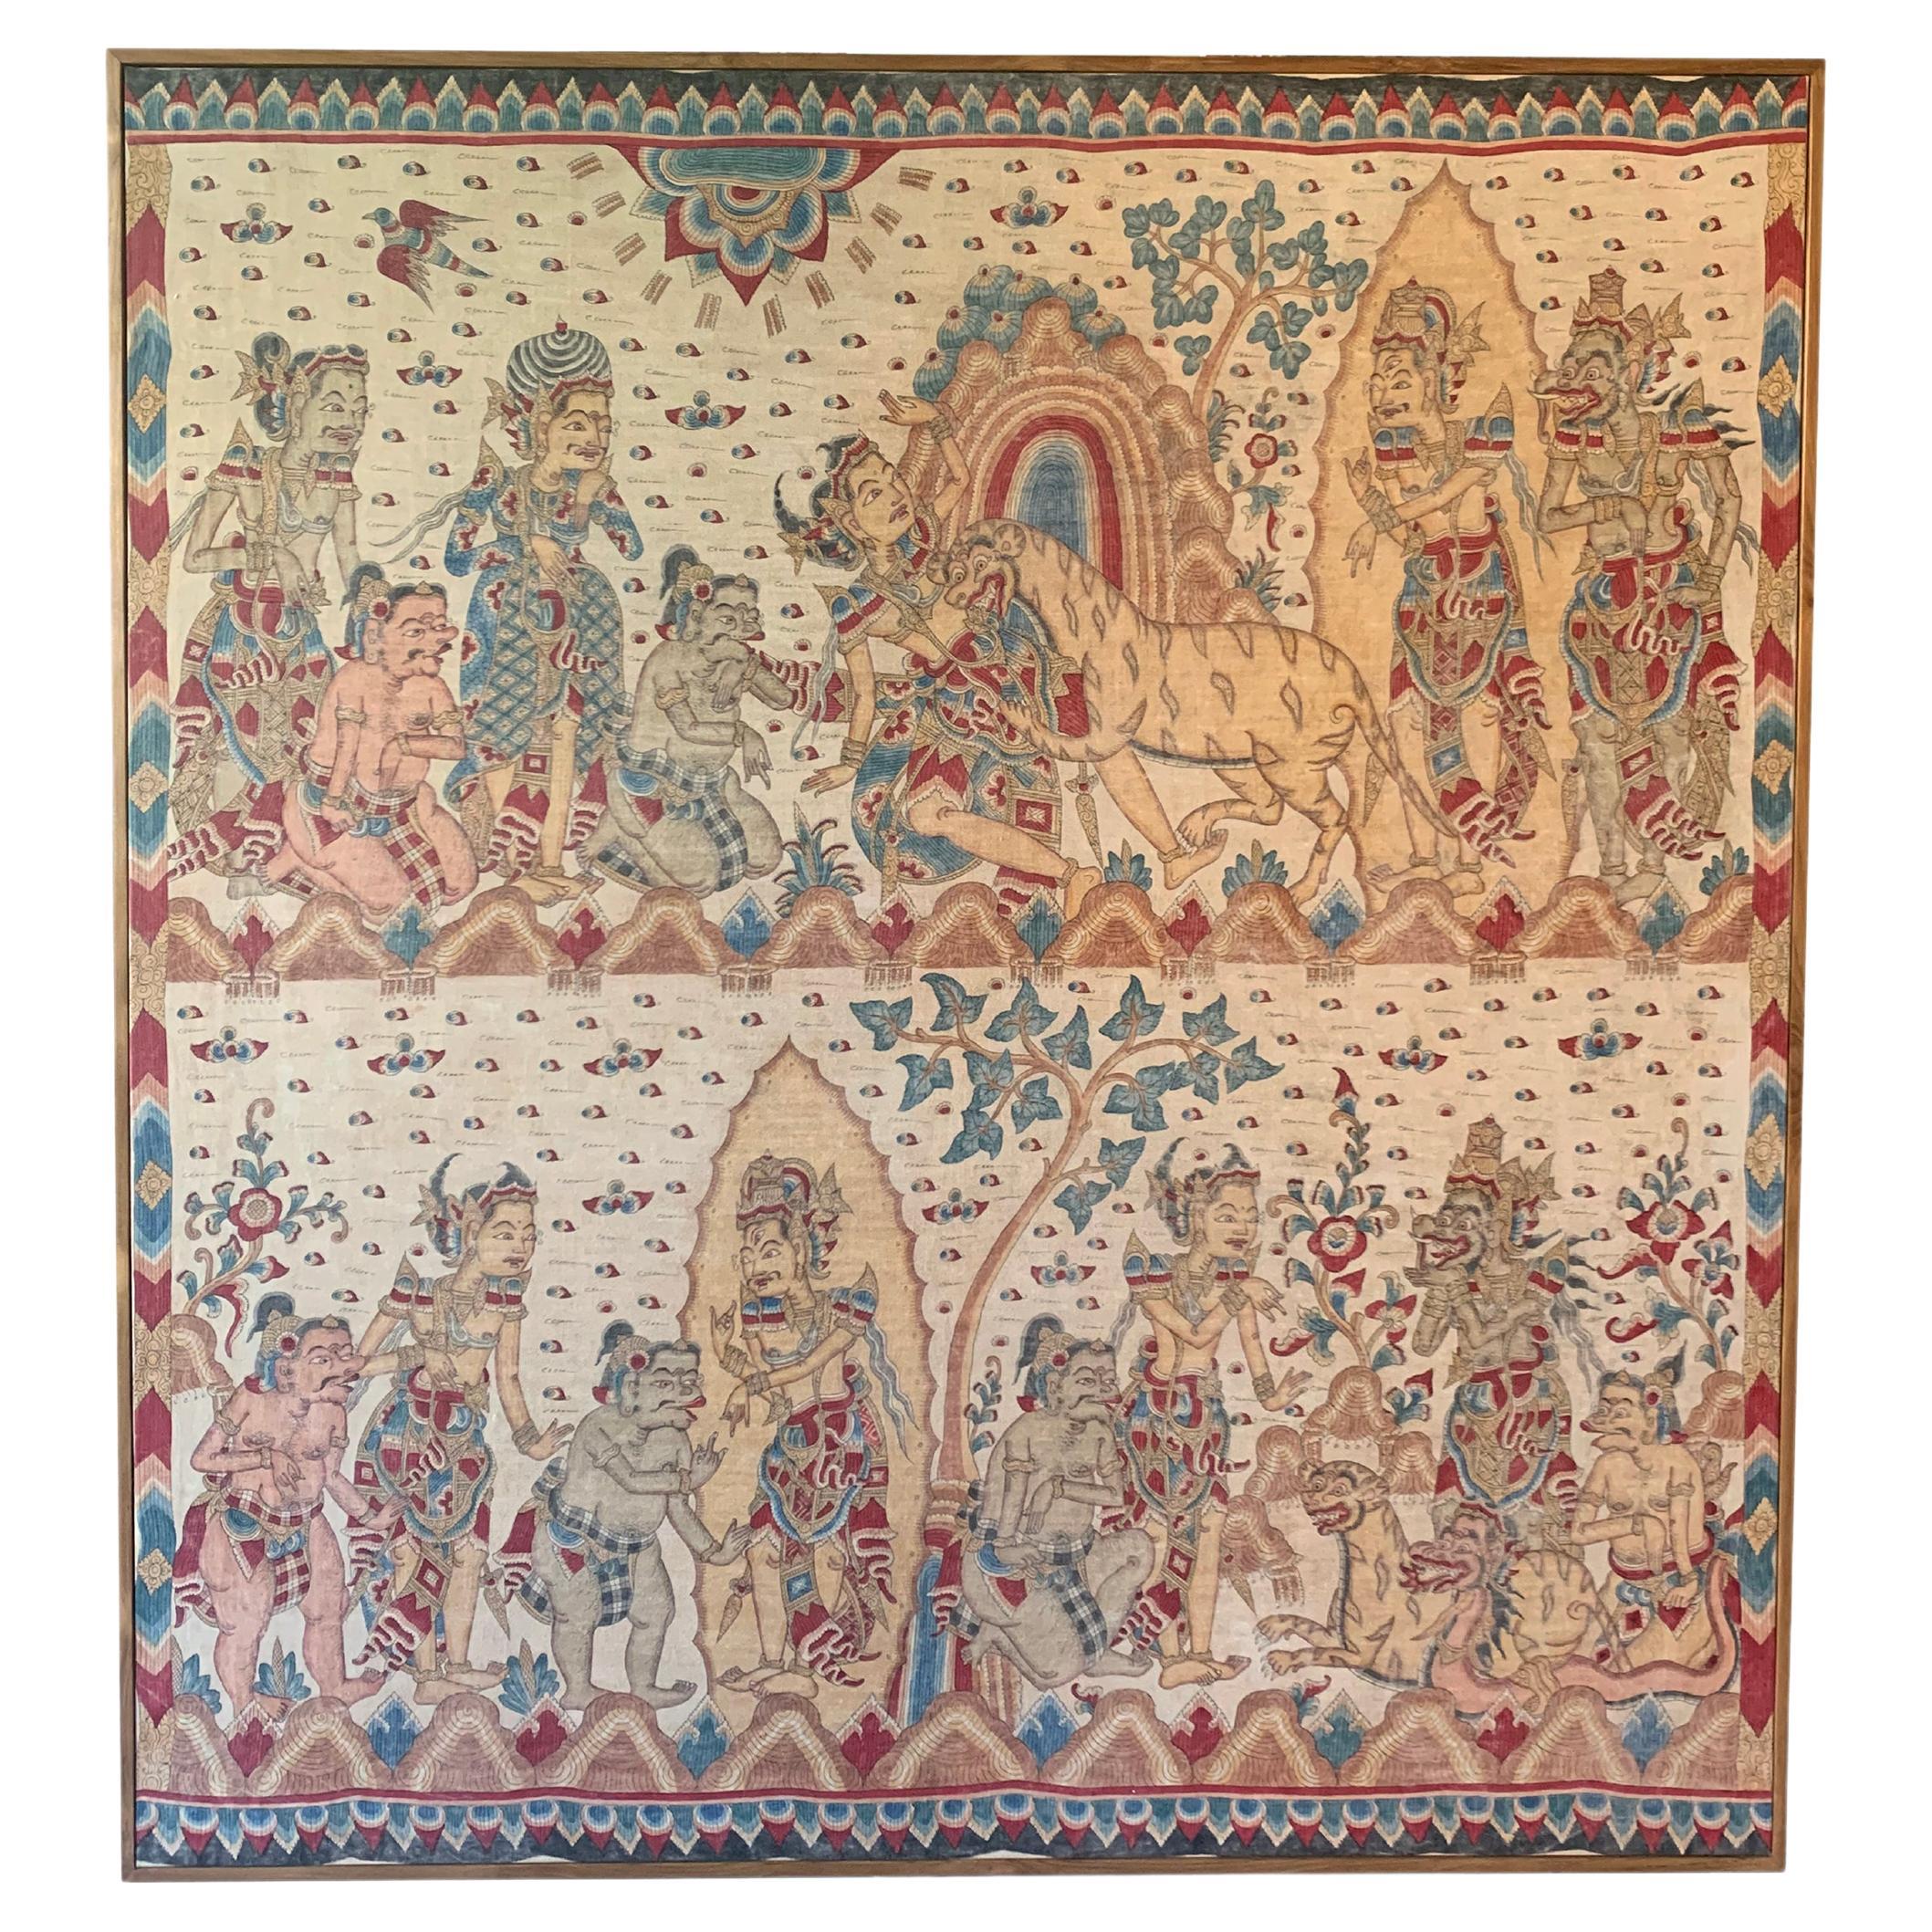 Bali Hindu Textile Framed 'Kamasan' Painting, Indonesia C. 1950 For Sale